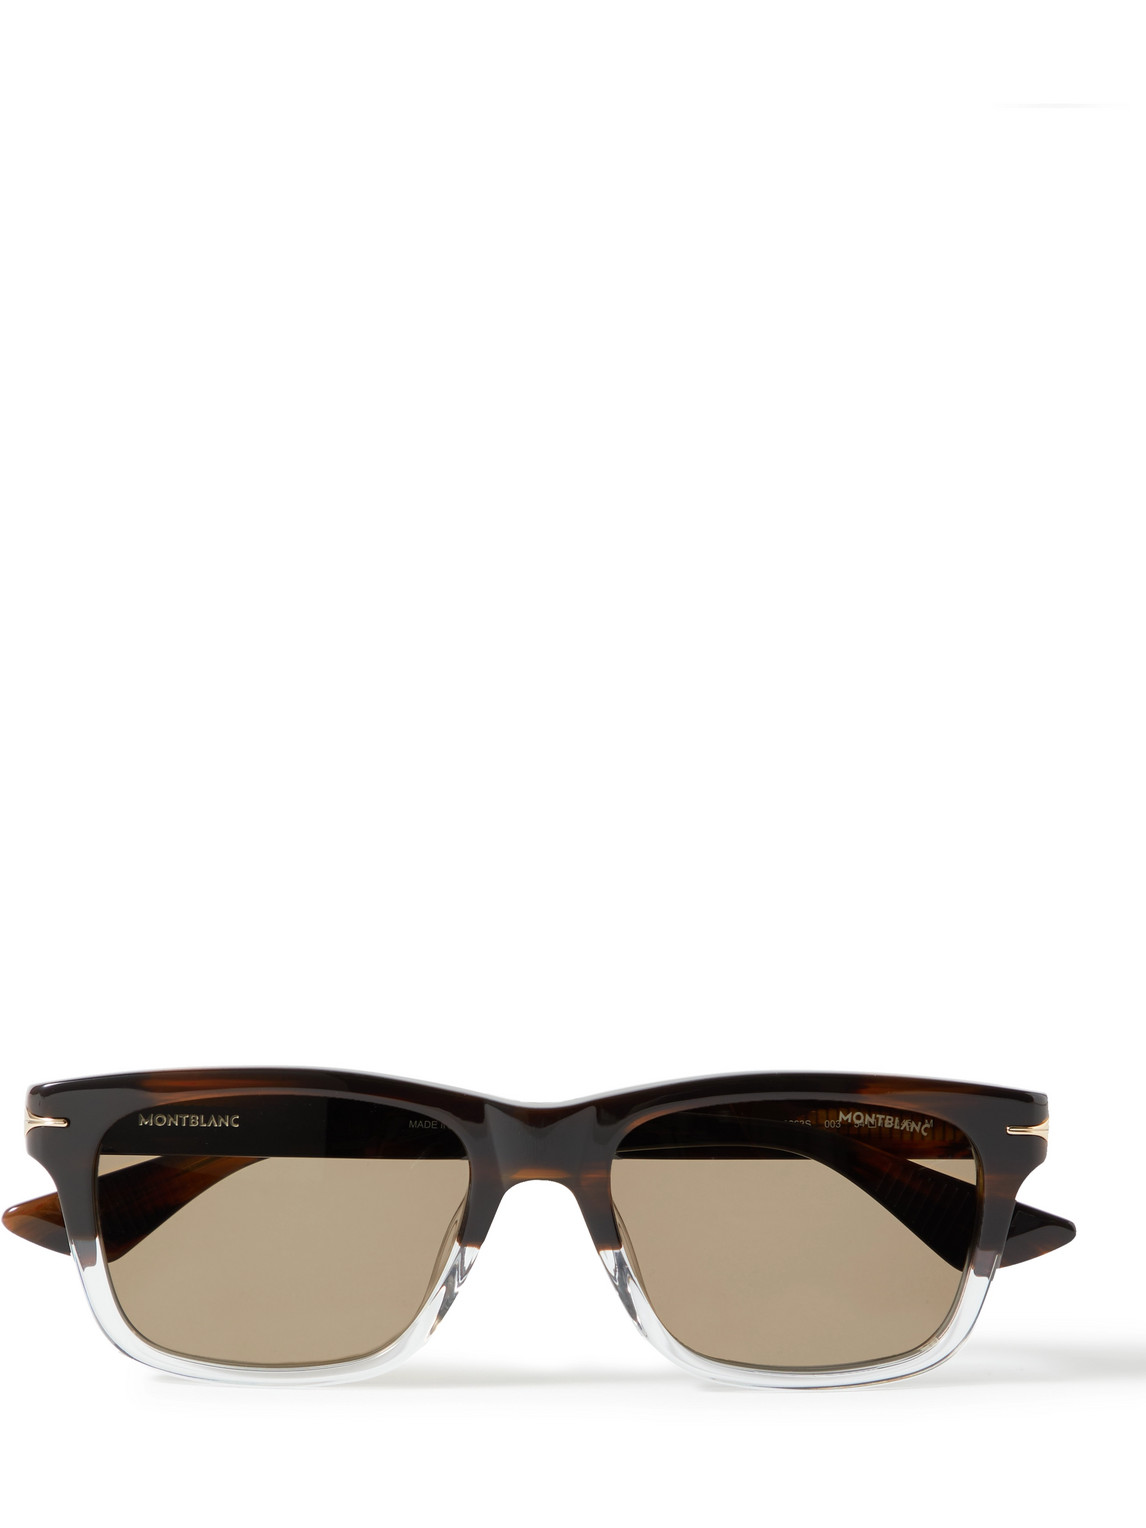 Montblanc Square-frame Tortoiseshell Acetate Sunglasses